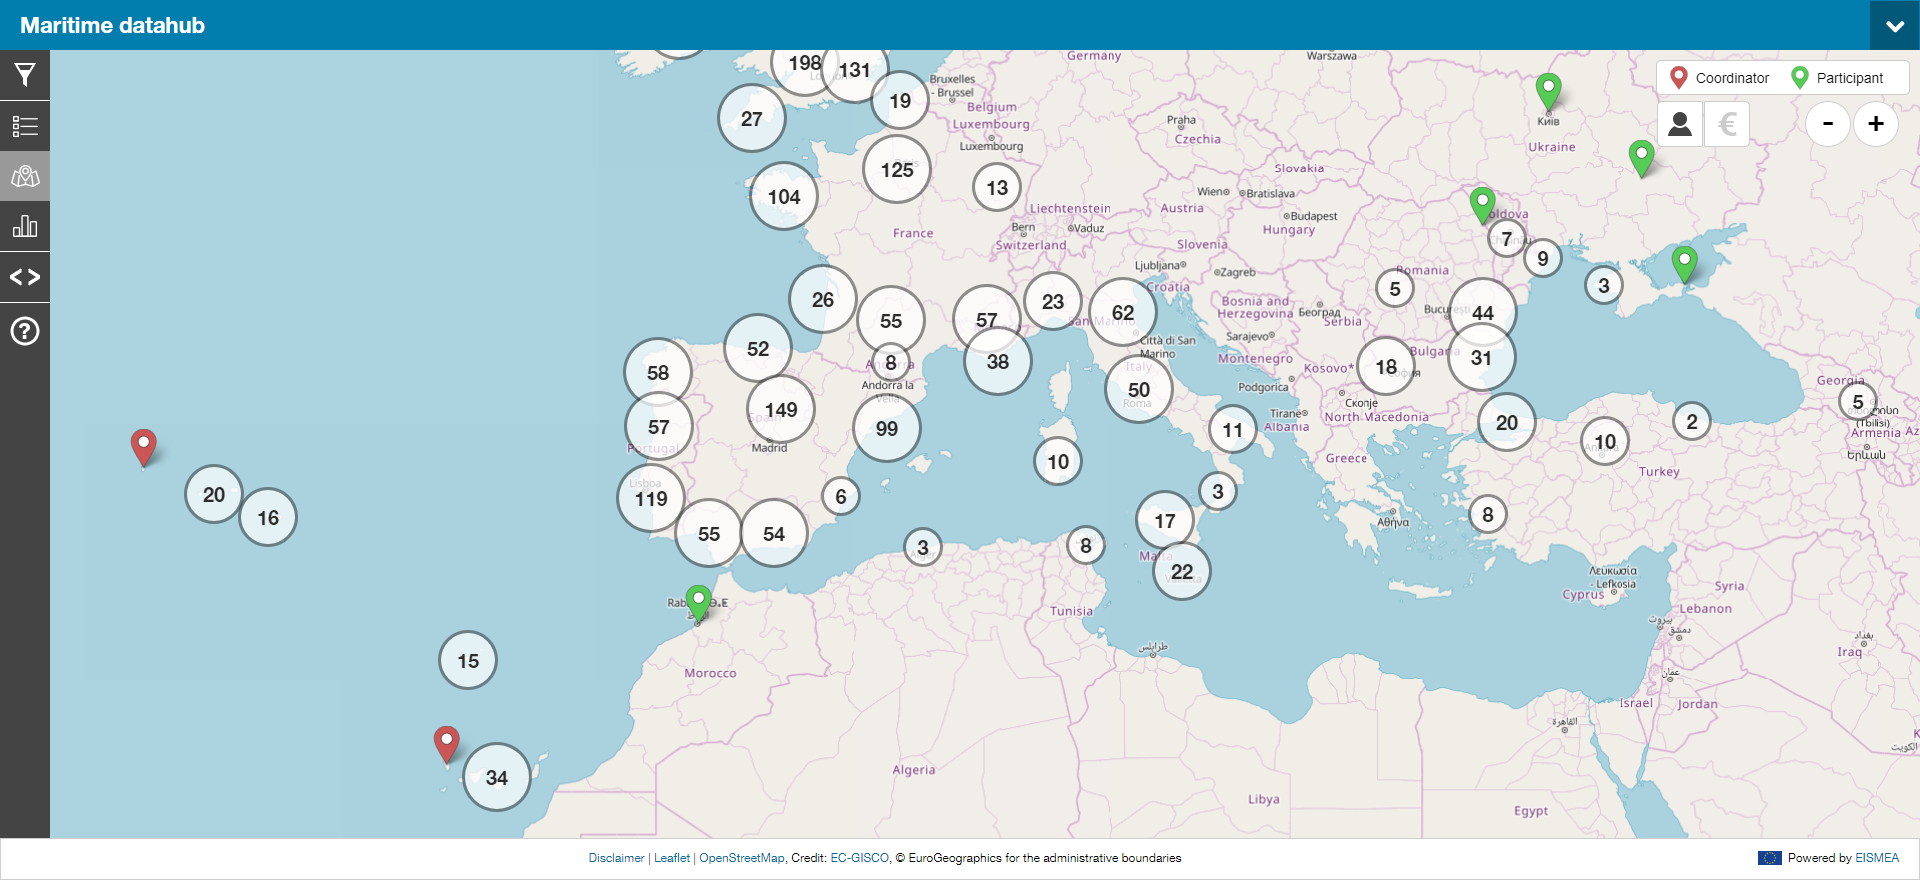 screenshot maritime datahub with map ofmediterranean area